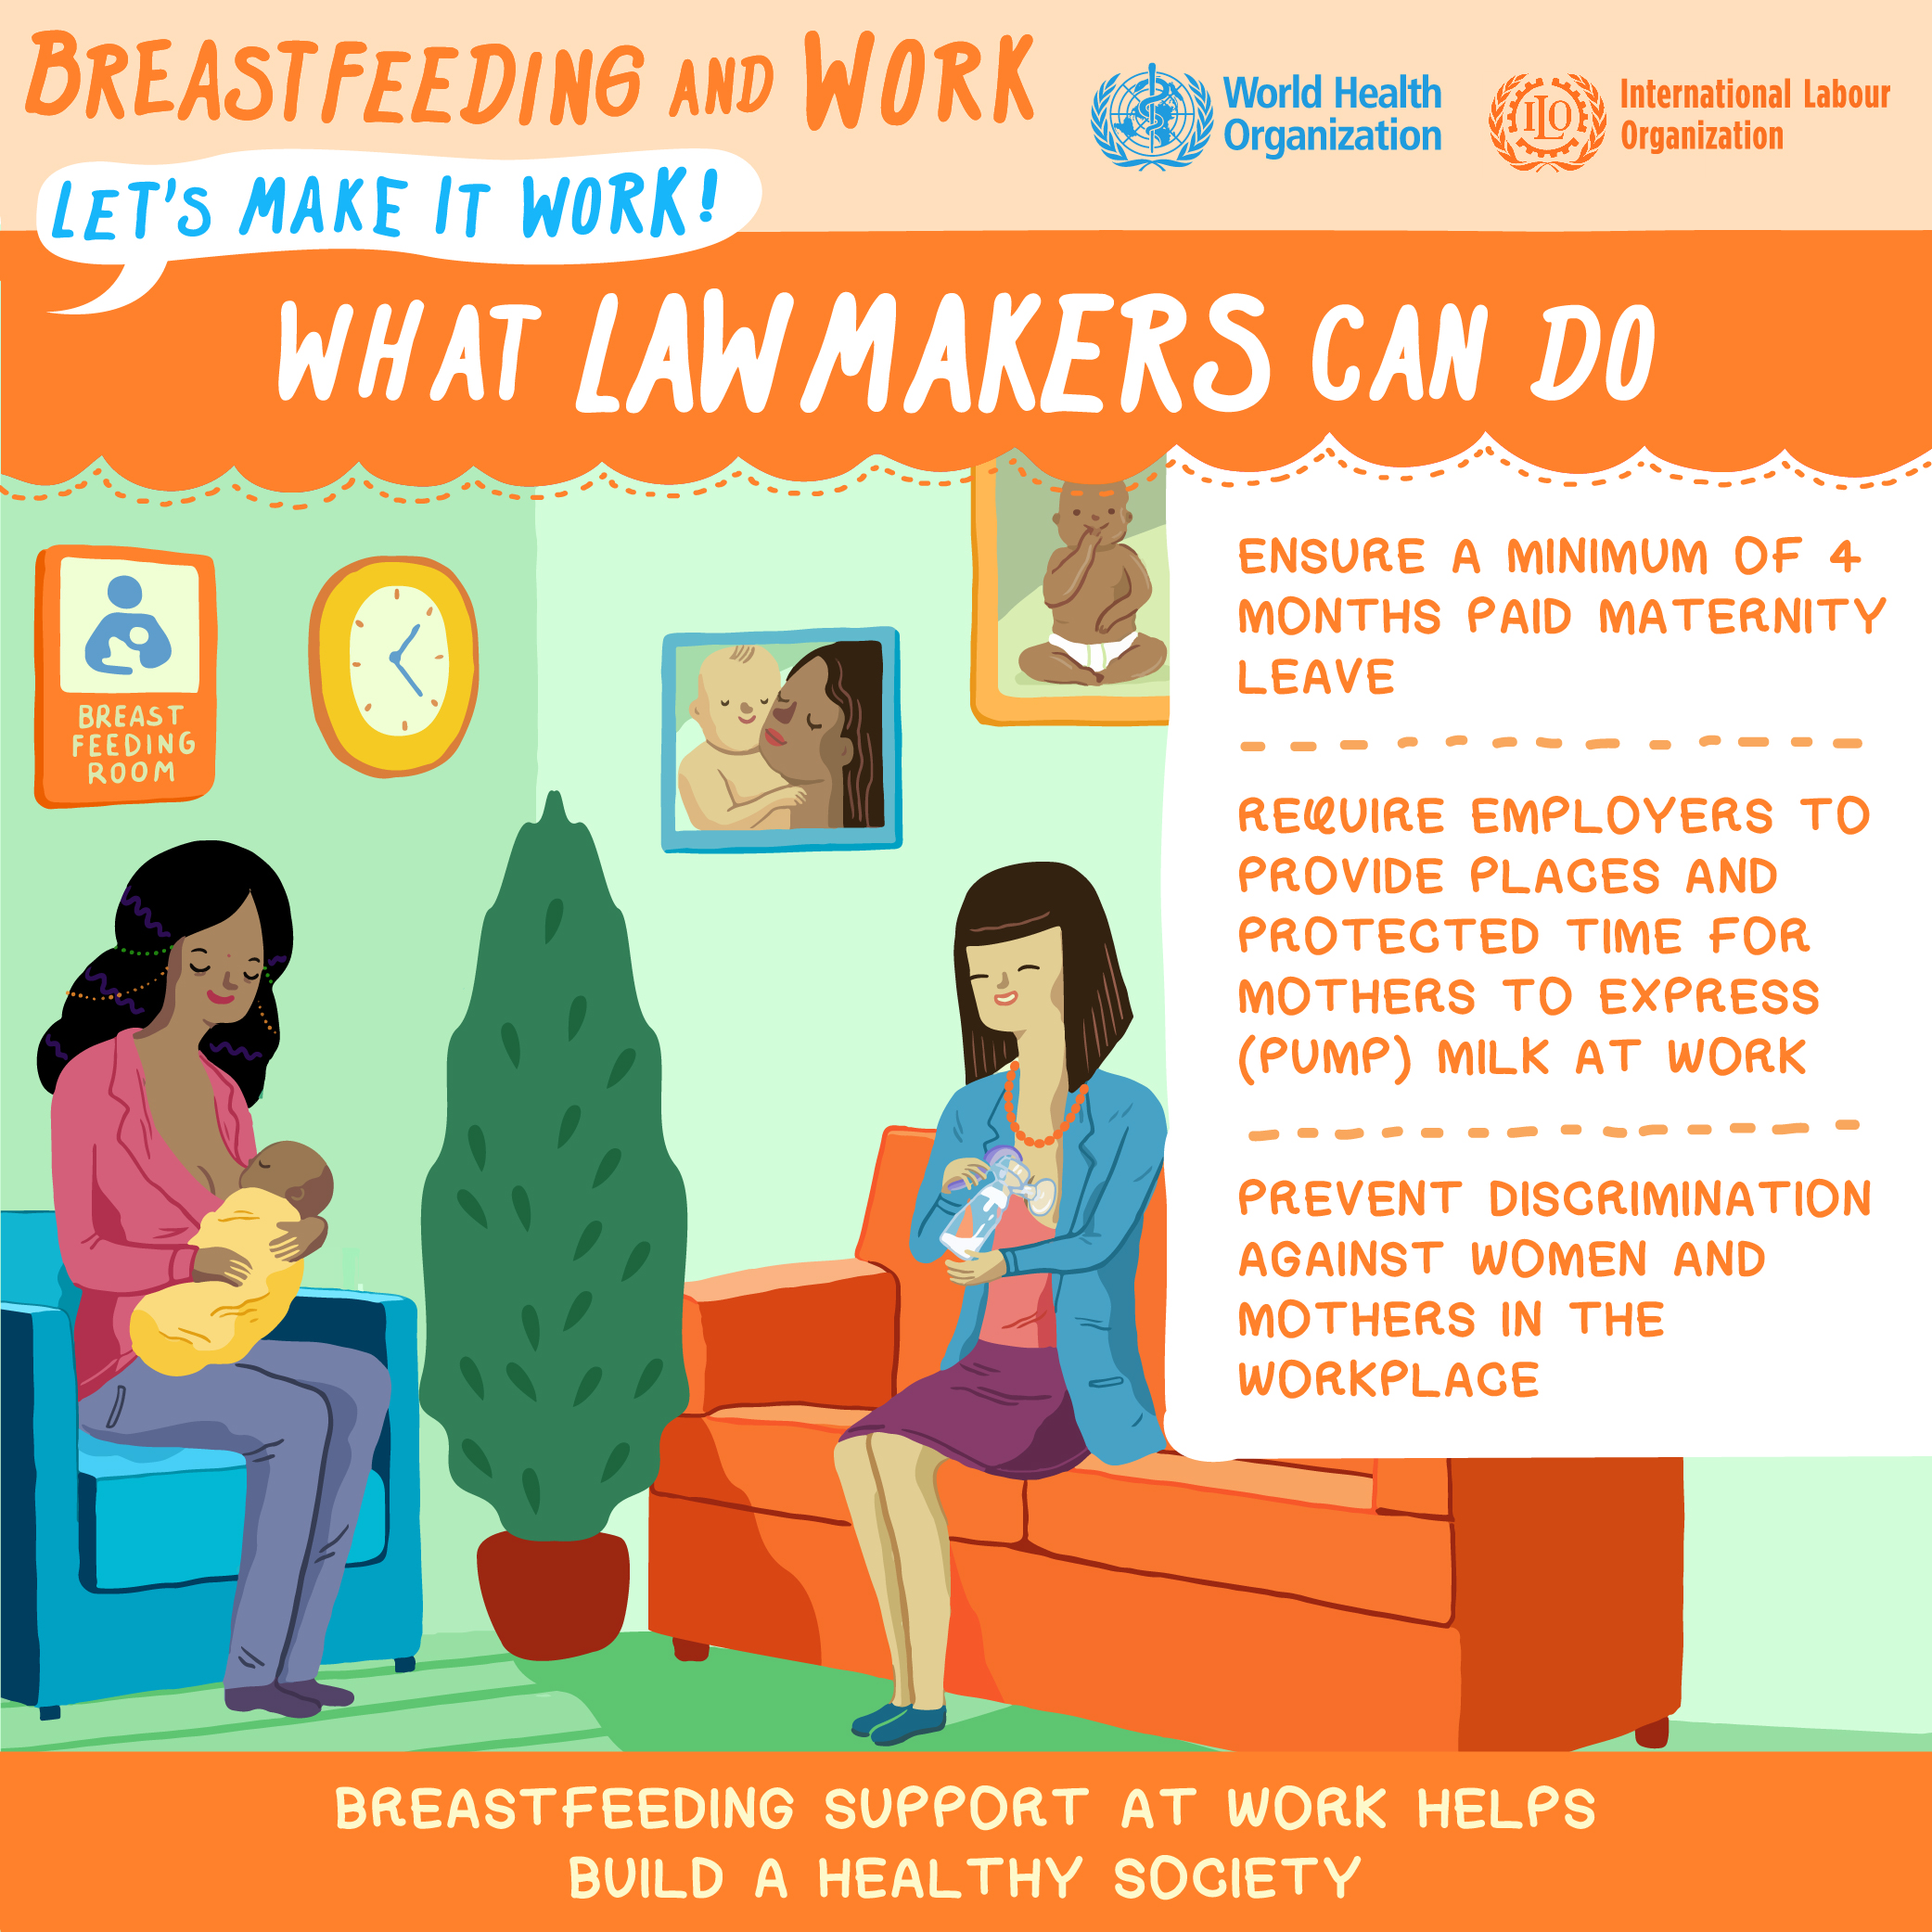 WHO_BreastfeedingWeek2015_EN.jpg